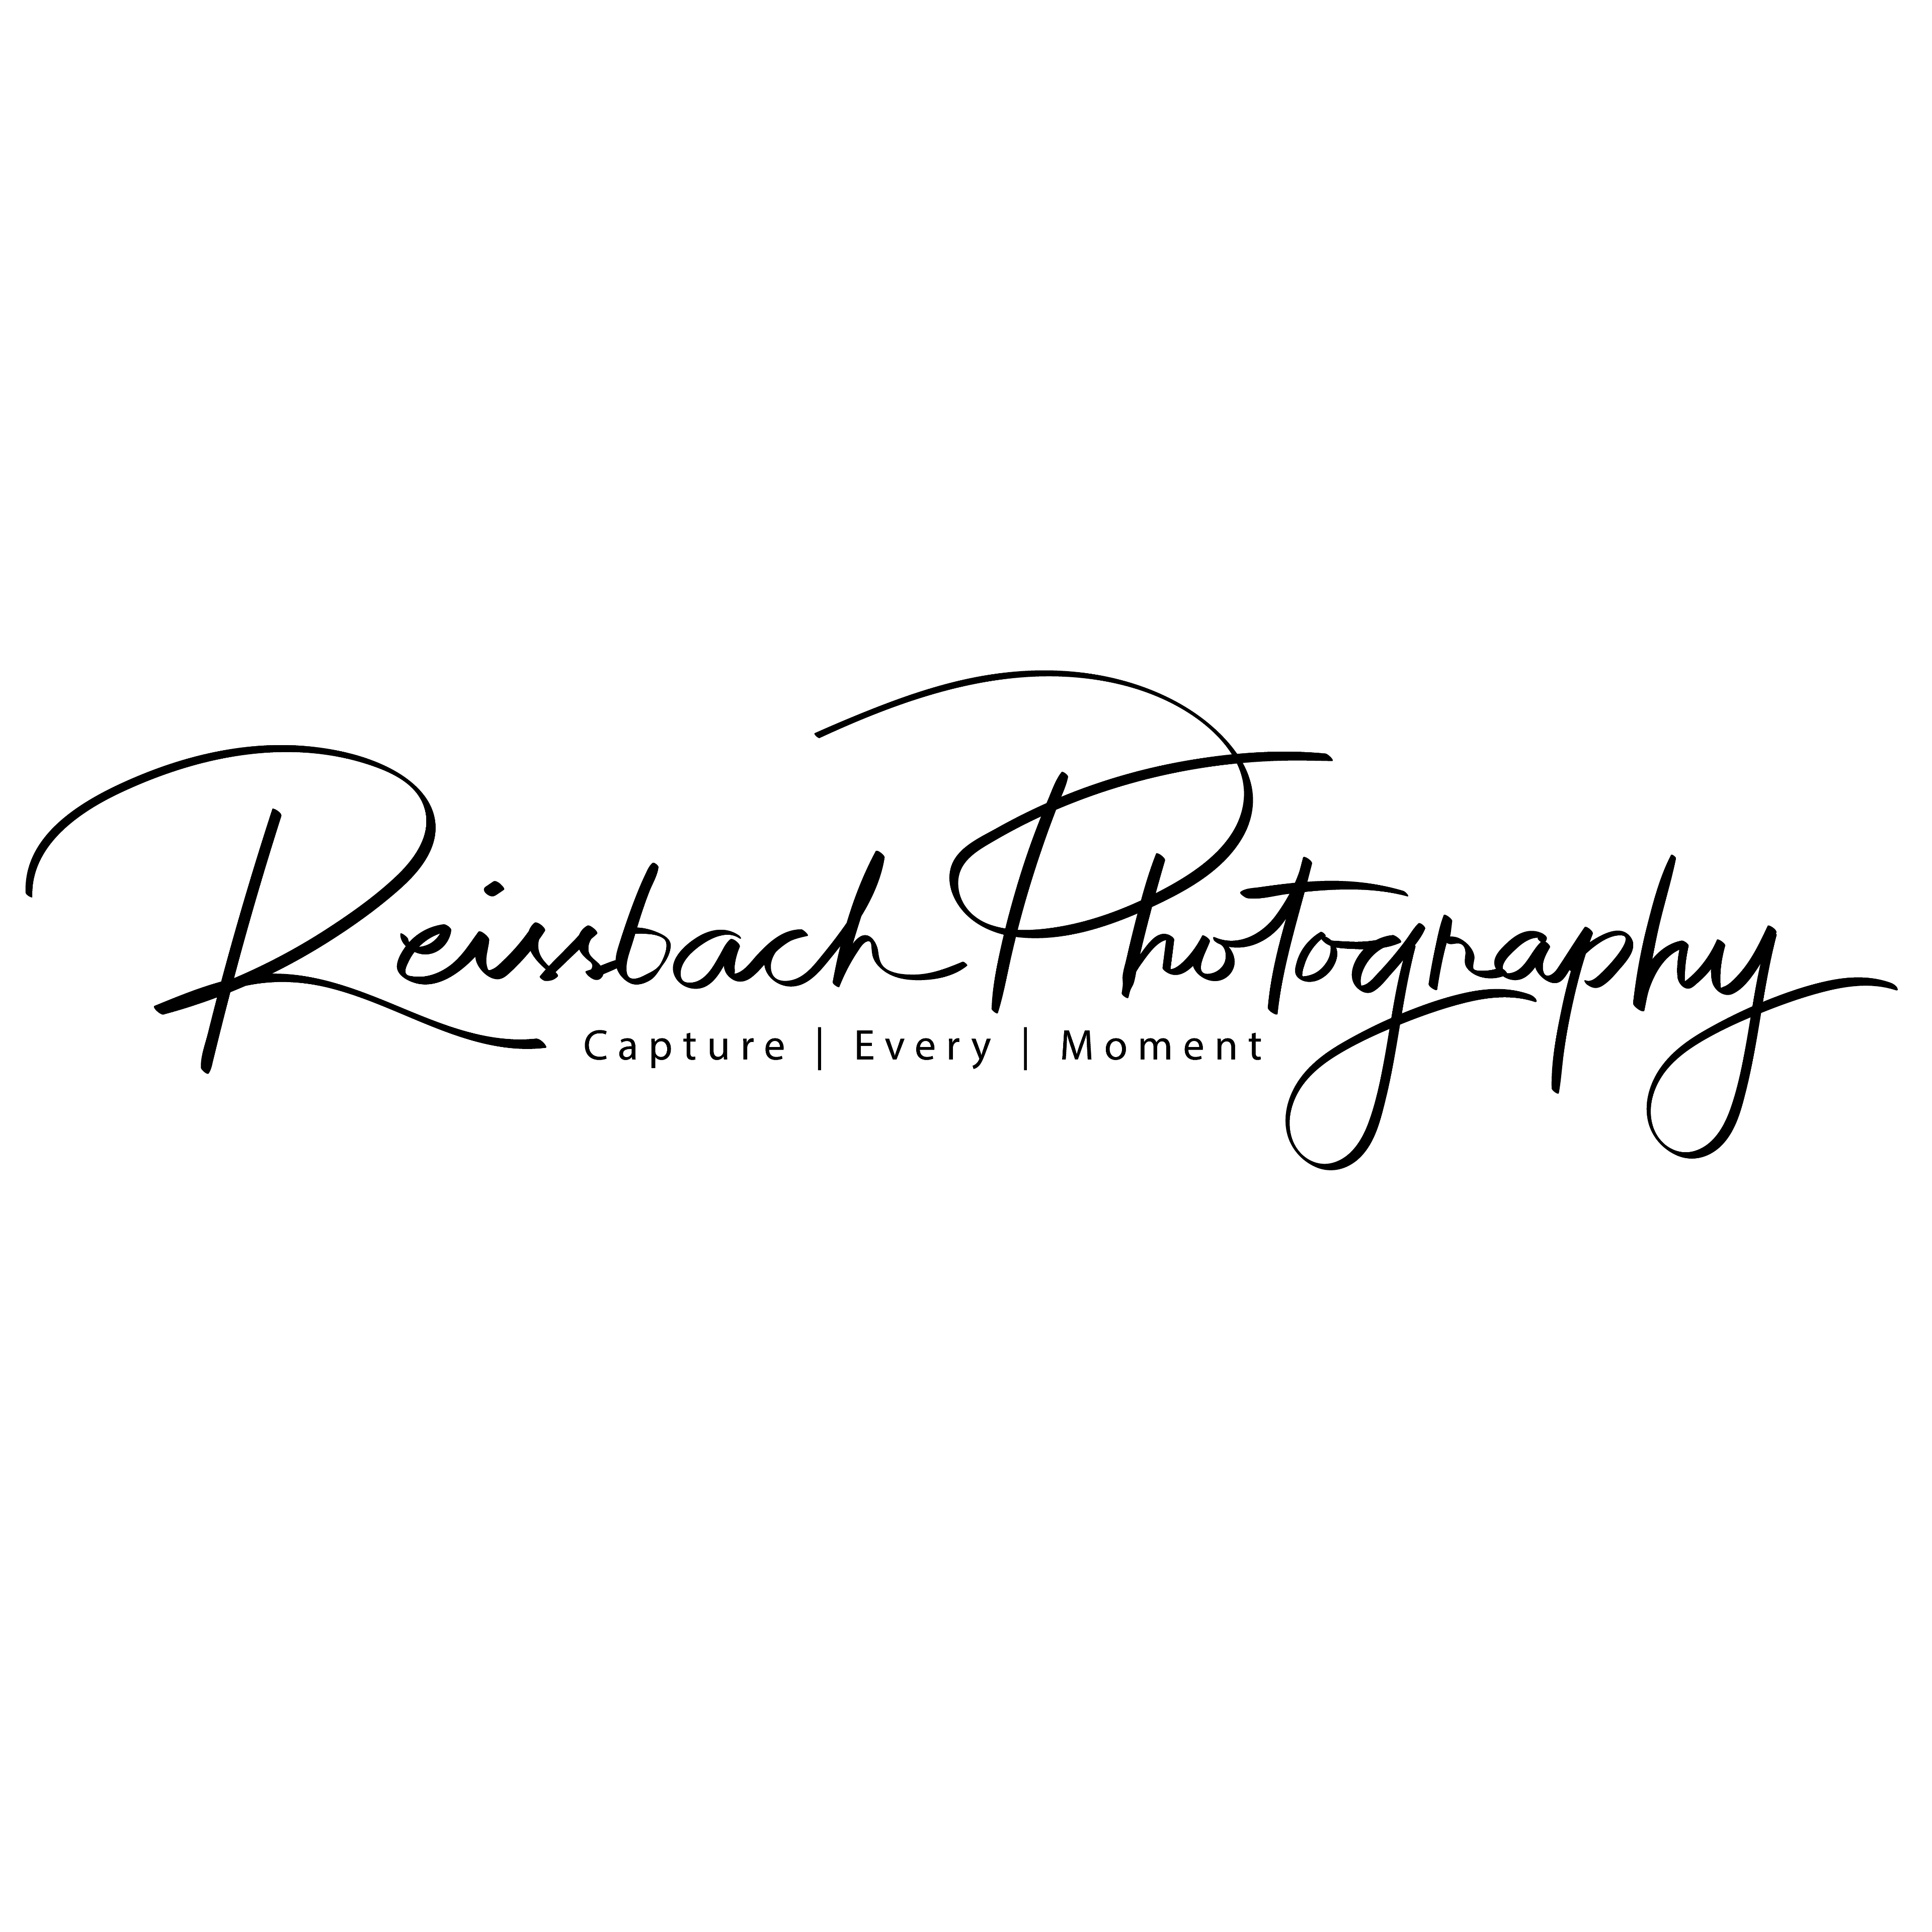 Reissbach | Photography